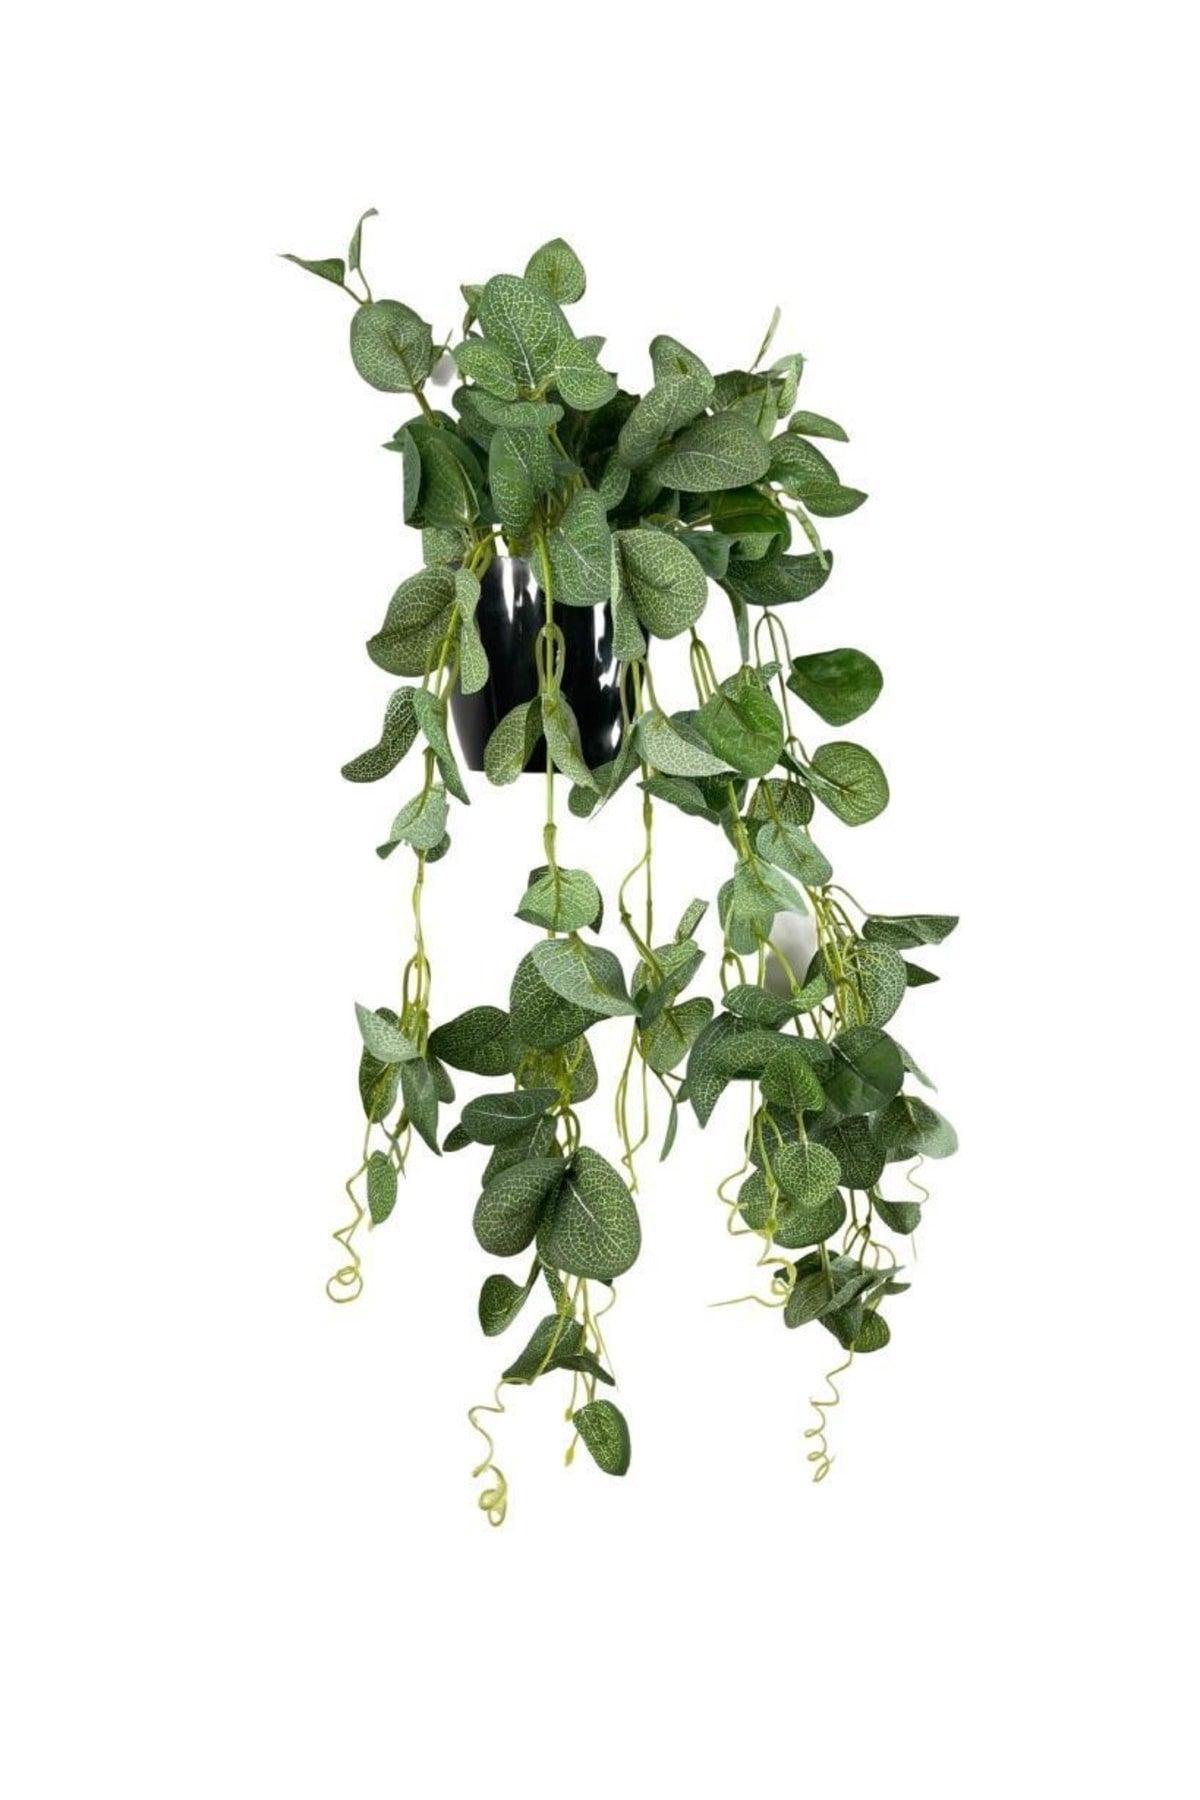 Artificial Flower Pot Hanging Fabric Eucalyptus Pastel Green 60*20cm - Swordslife